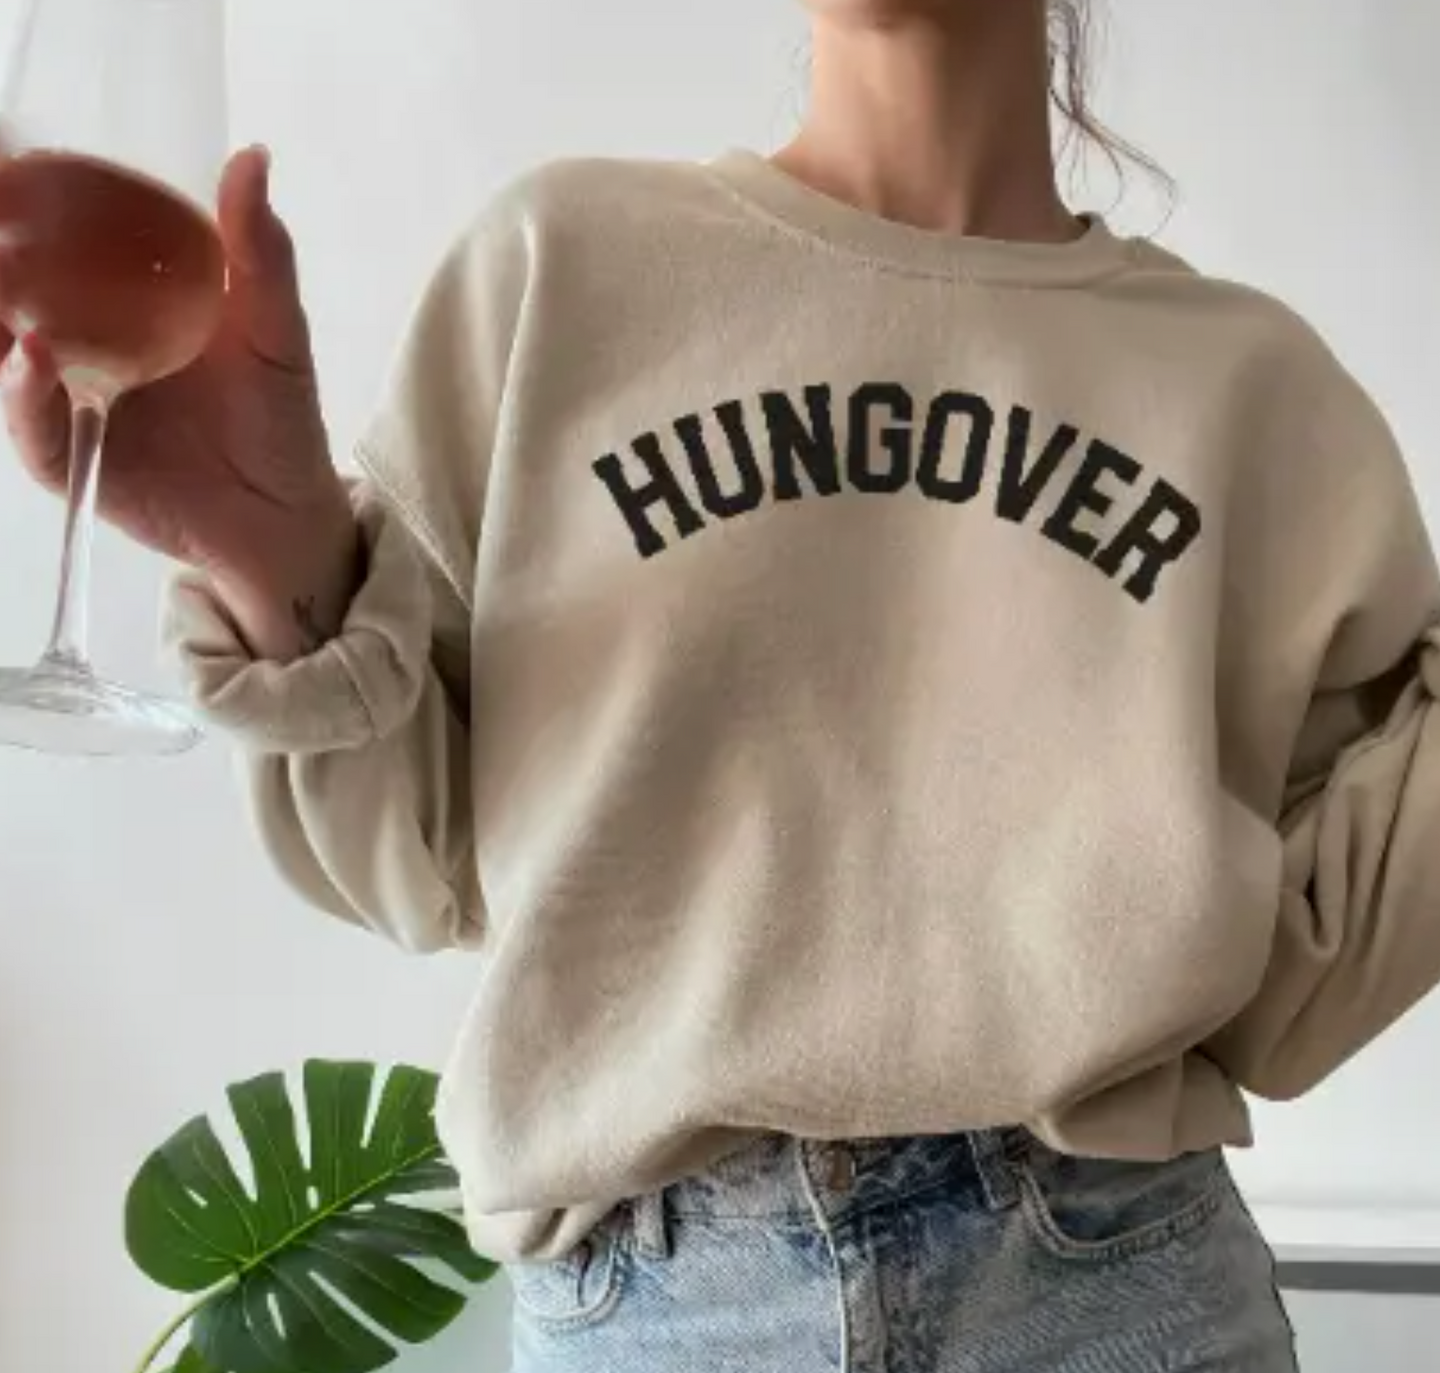 Hungover Sweatshirt